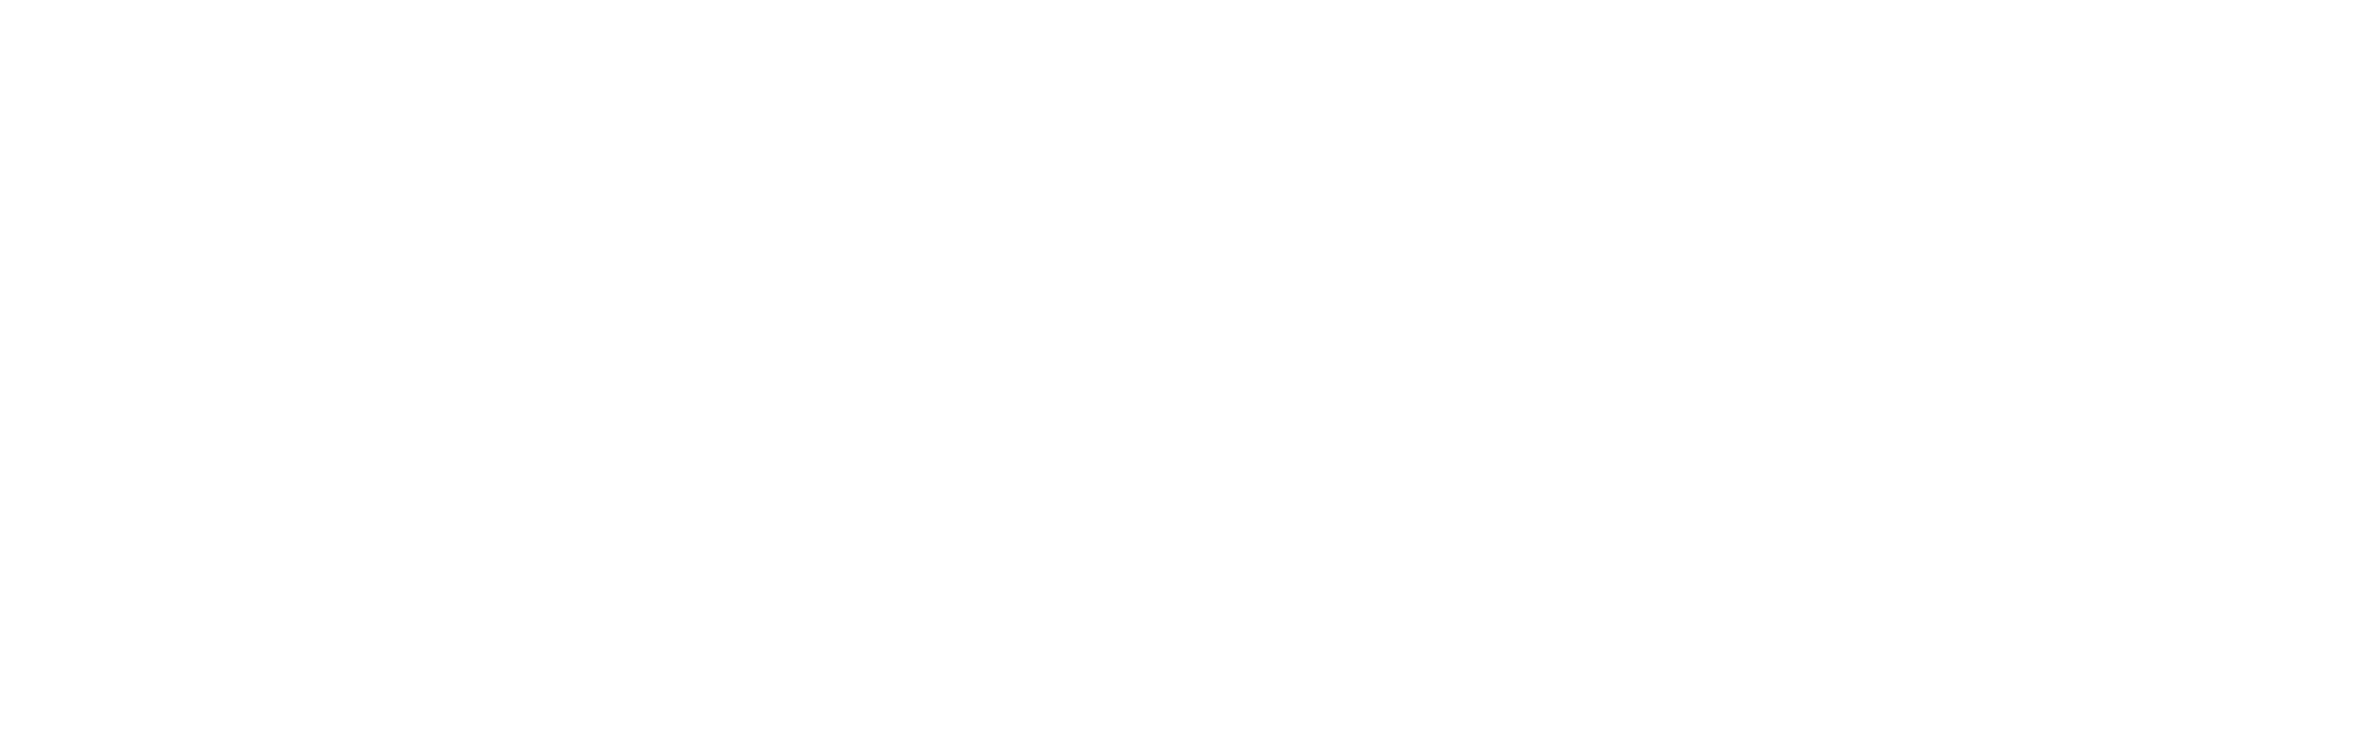 Dark Reaction Over Power